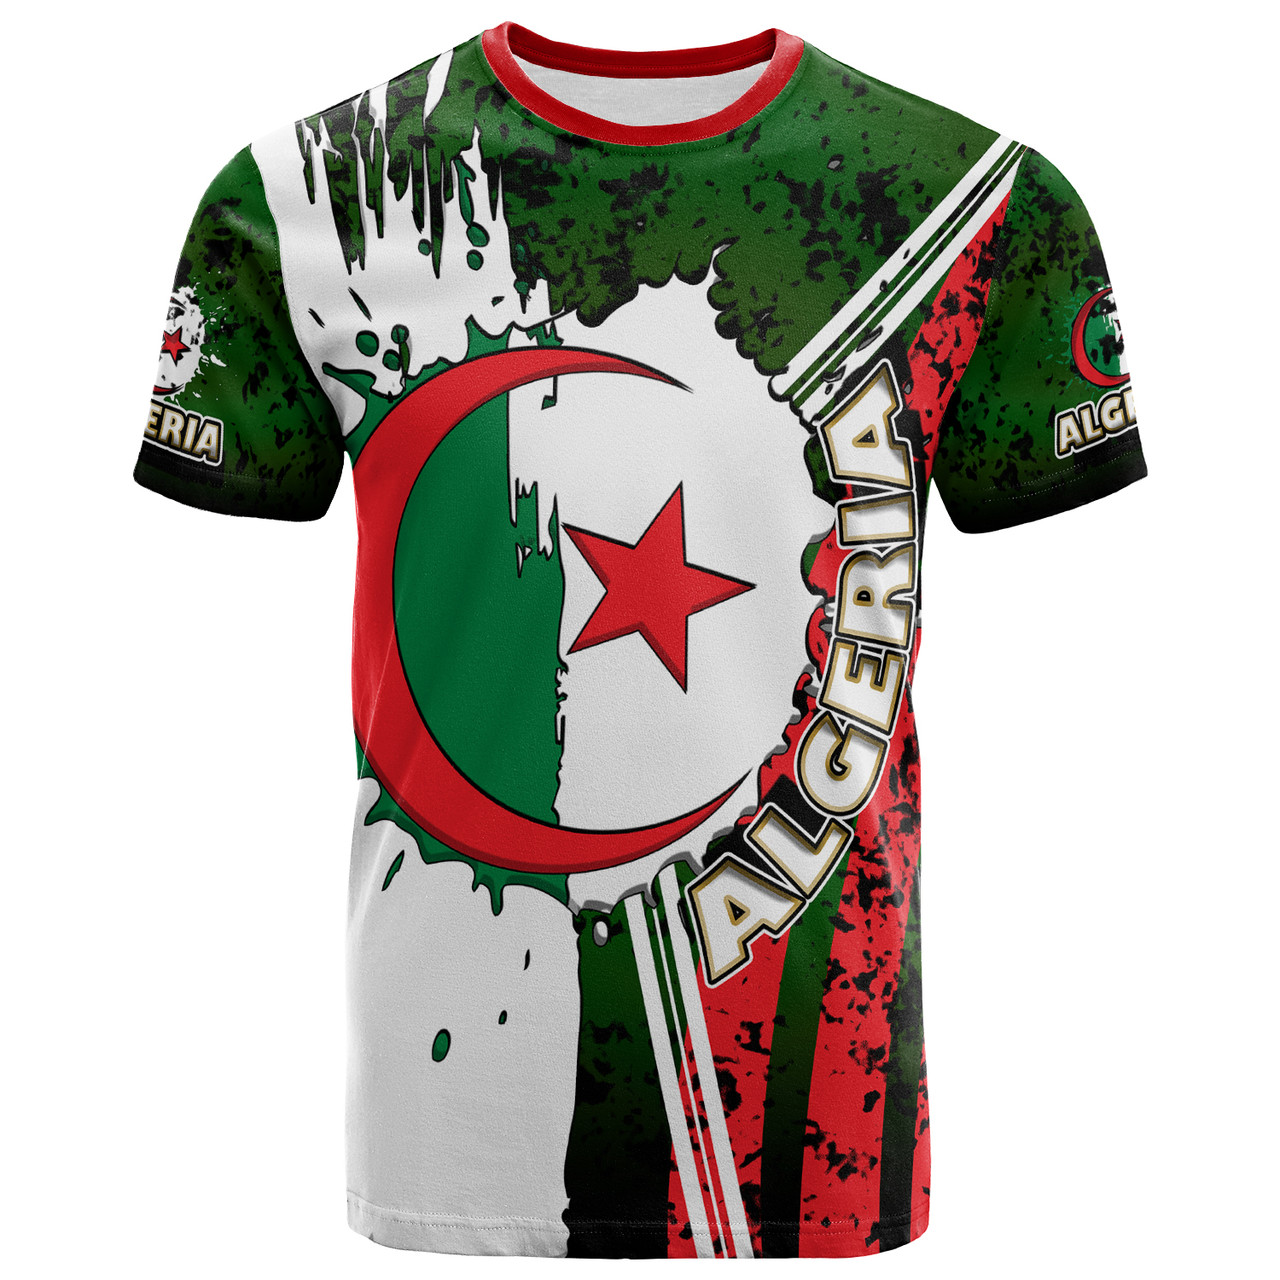 Algeria T-Shirt - Custom Algeria Independence Day T-Shirt